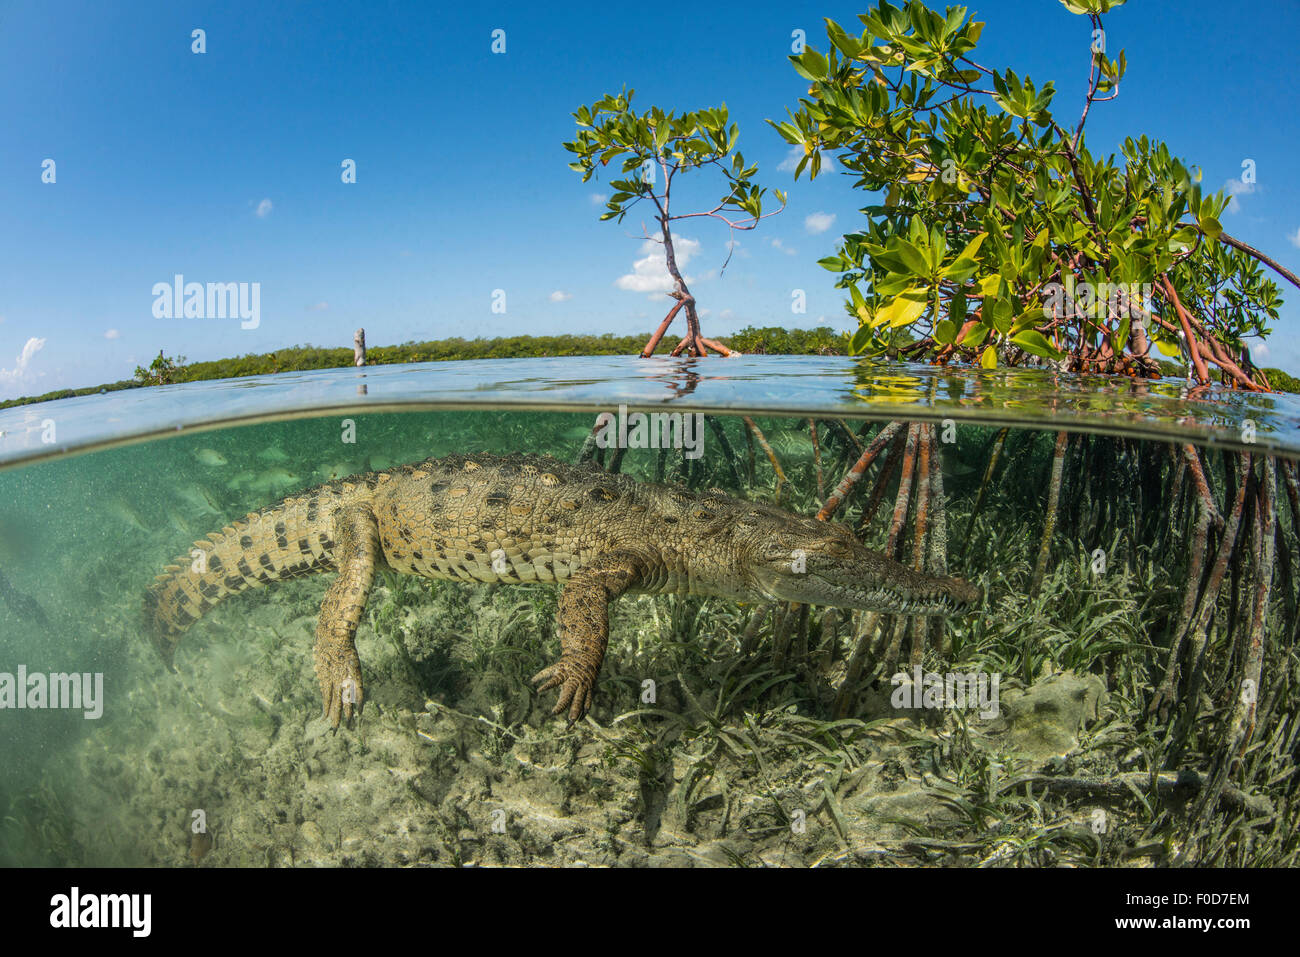 An American saltwater crocodile (Crocodylus acutus) swimming in the mangrove, Jardines De La Reina, Cuba. Stock Photo